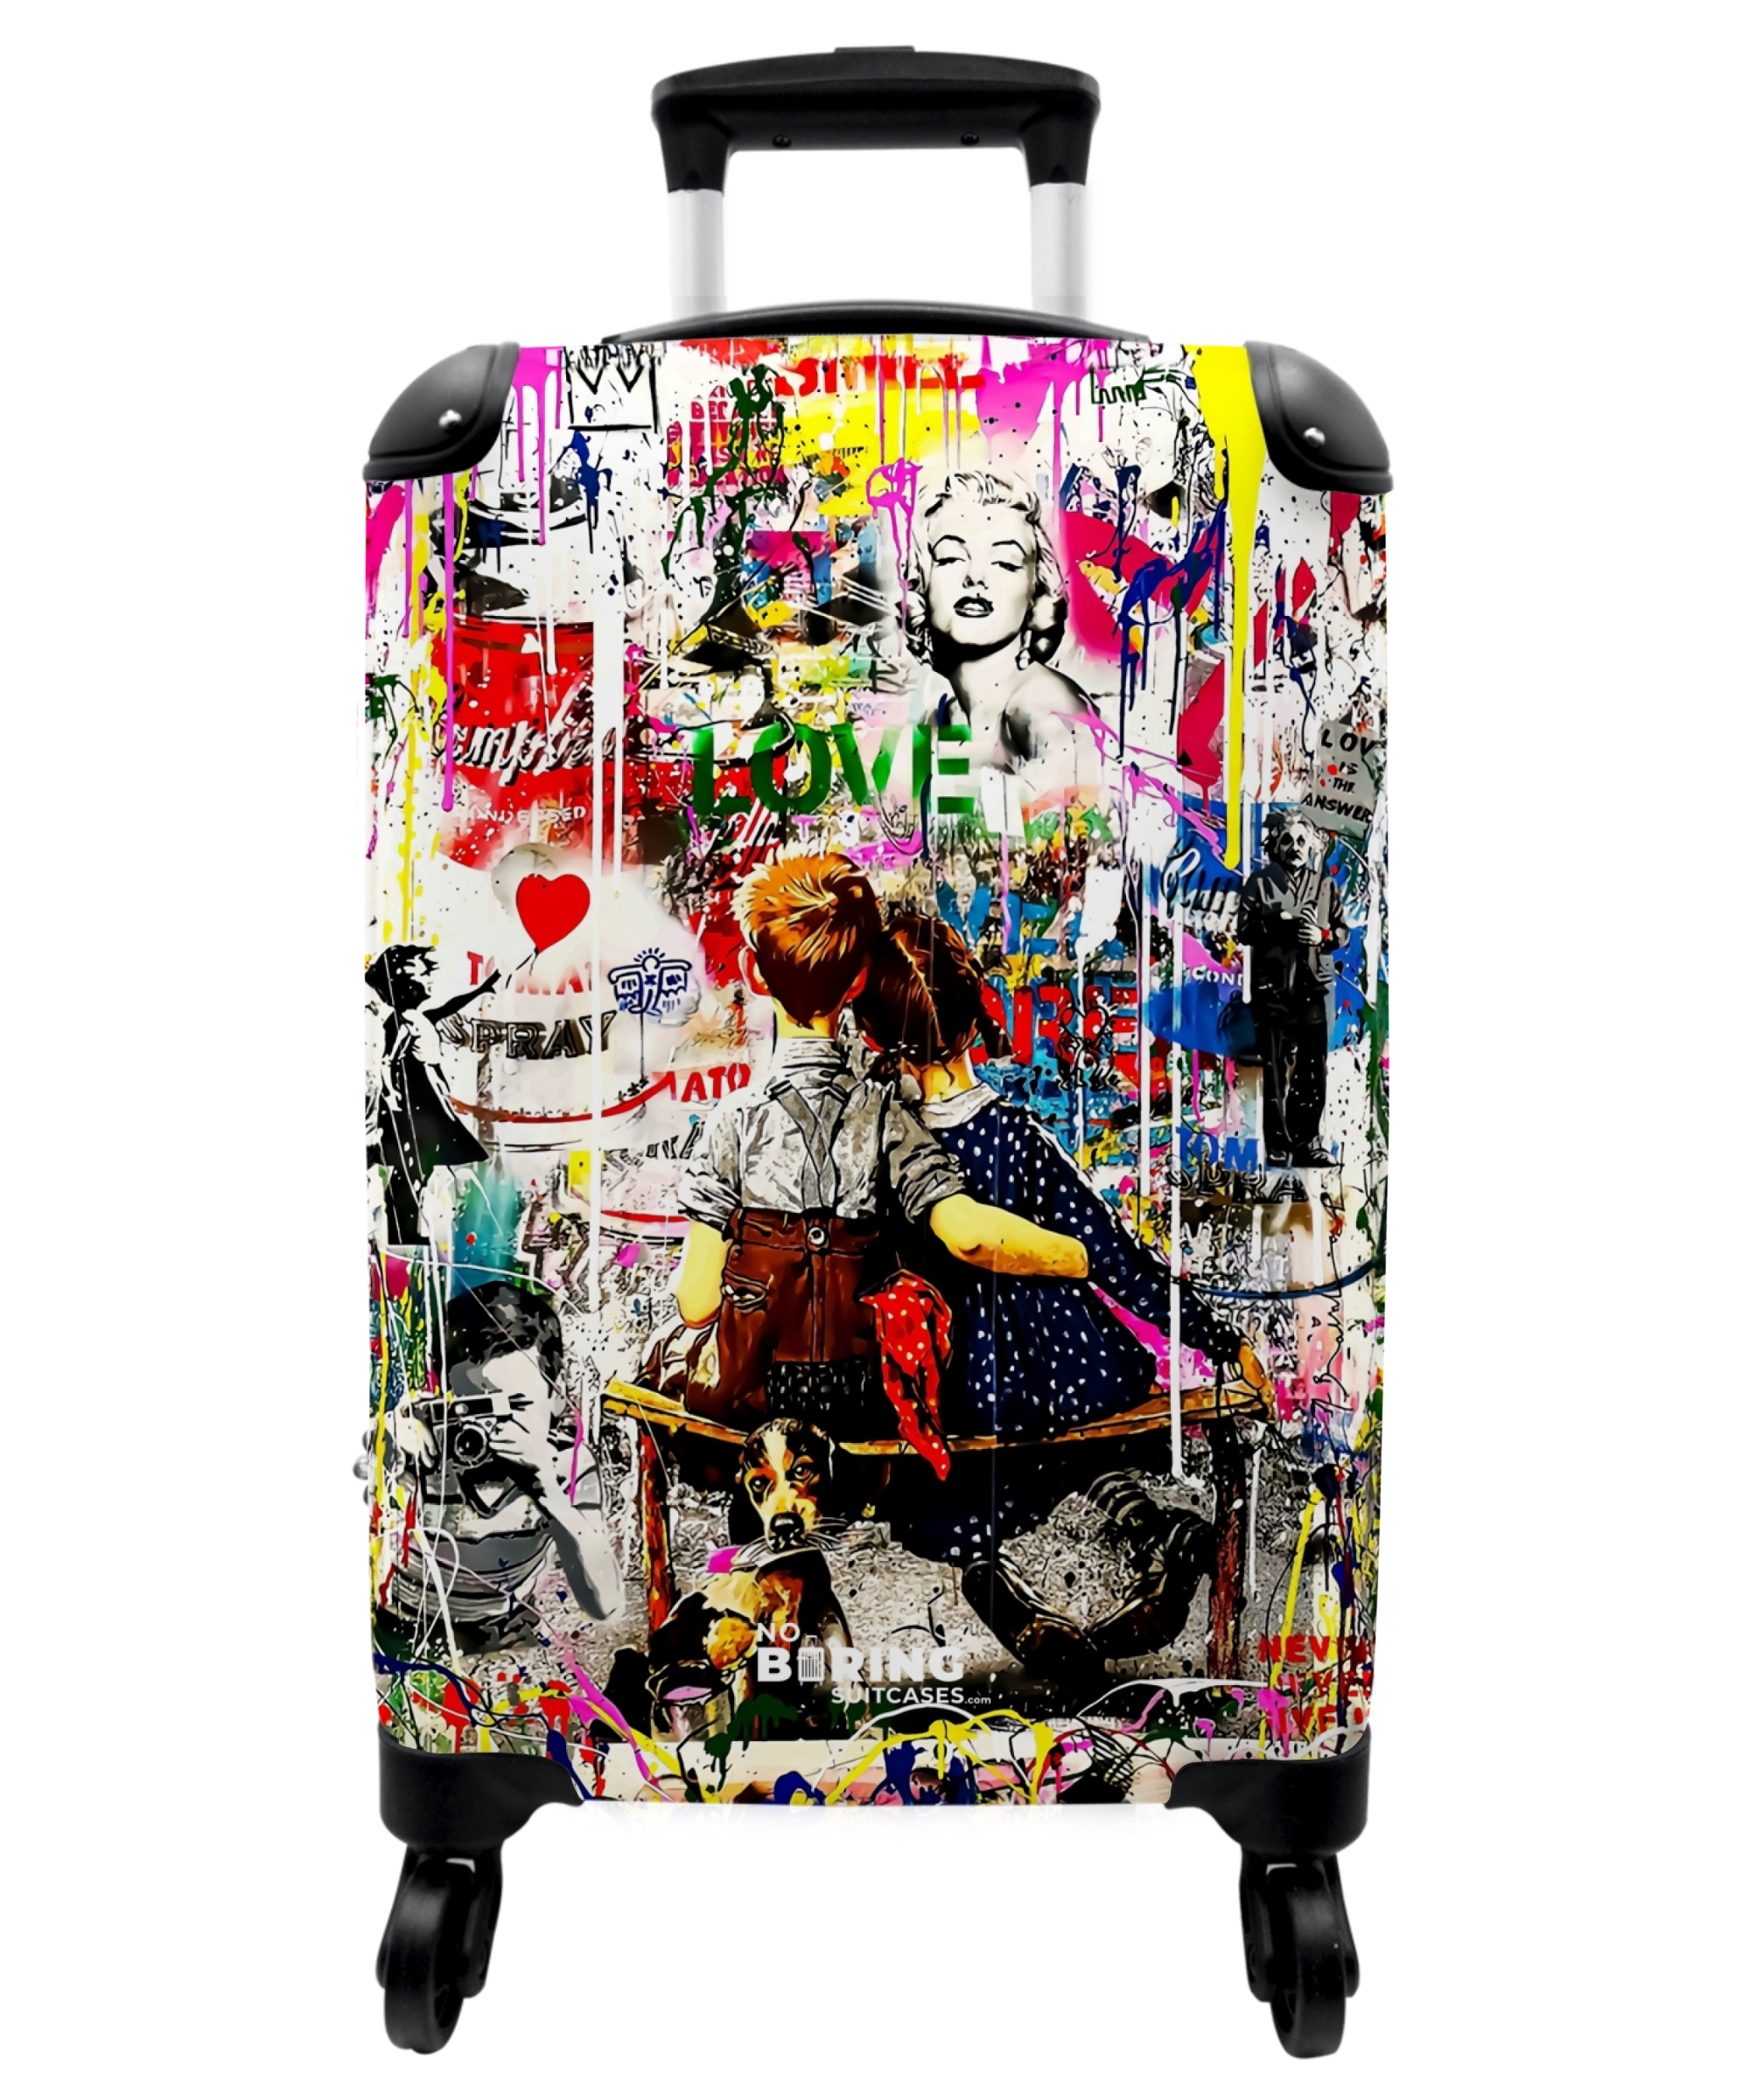 Koffer - Bekende kunstwerken als kleurrijke graffiti art